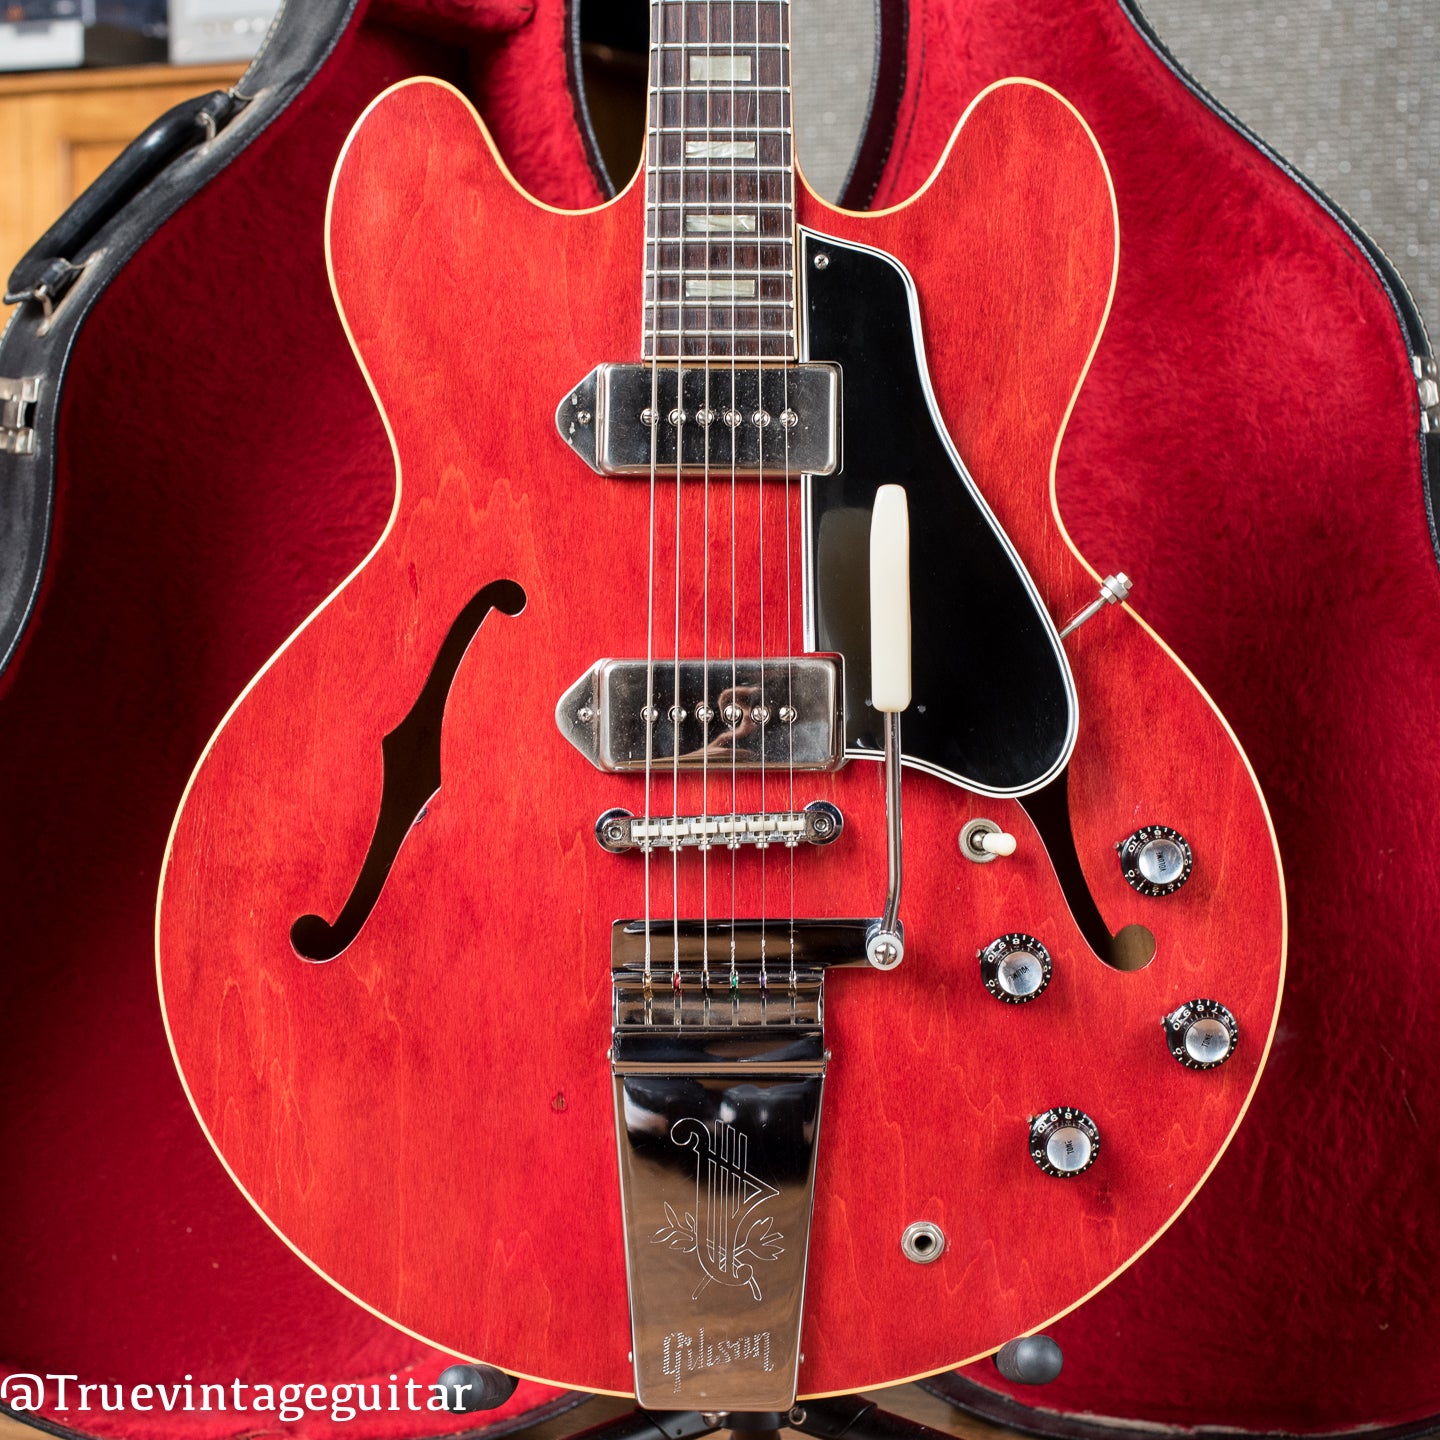 Vintage 1965 Gibson ES-330 guitar